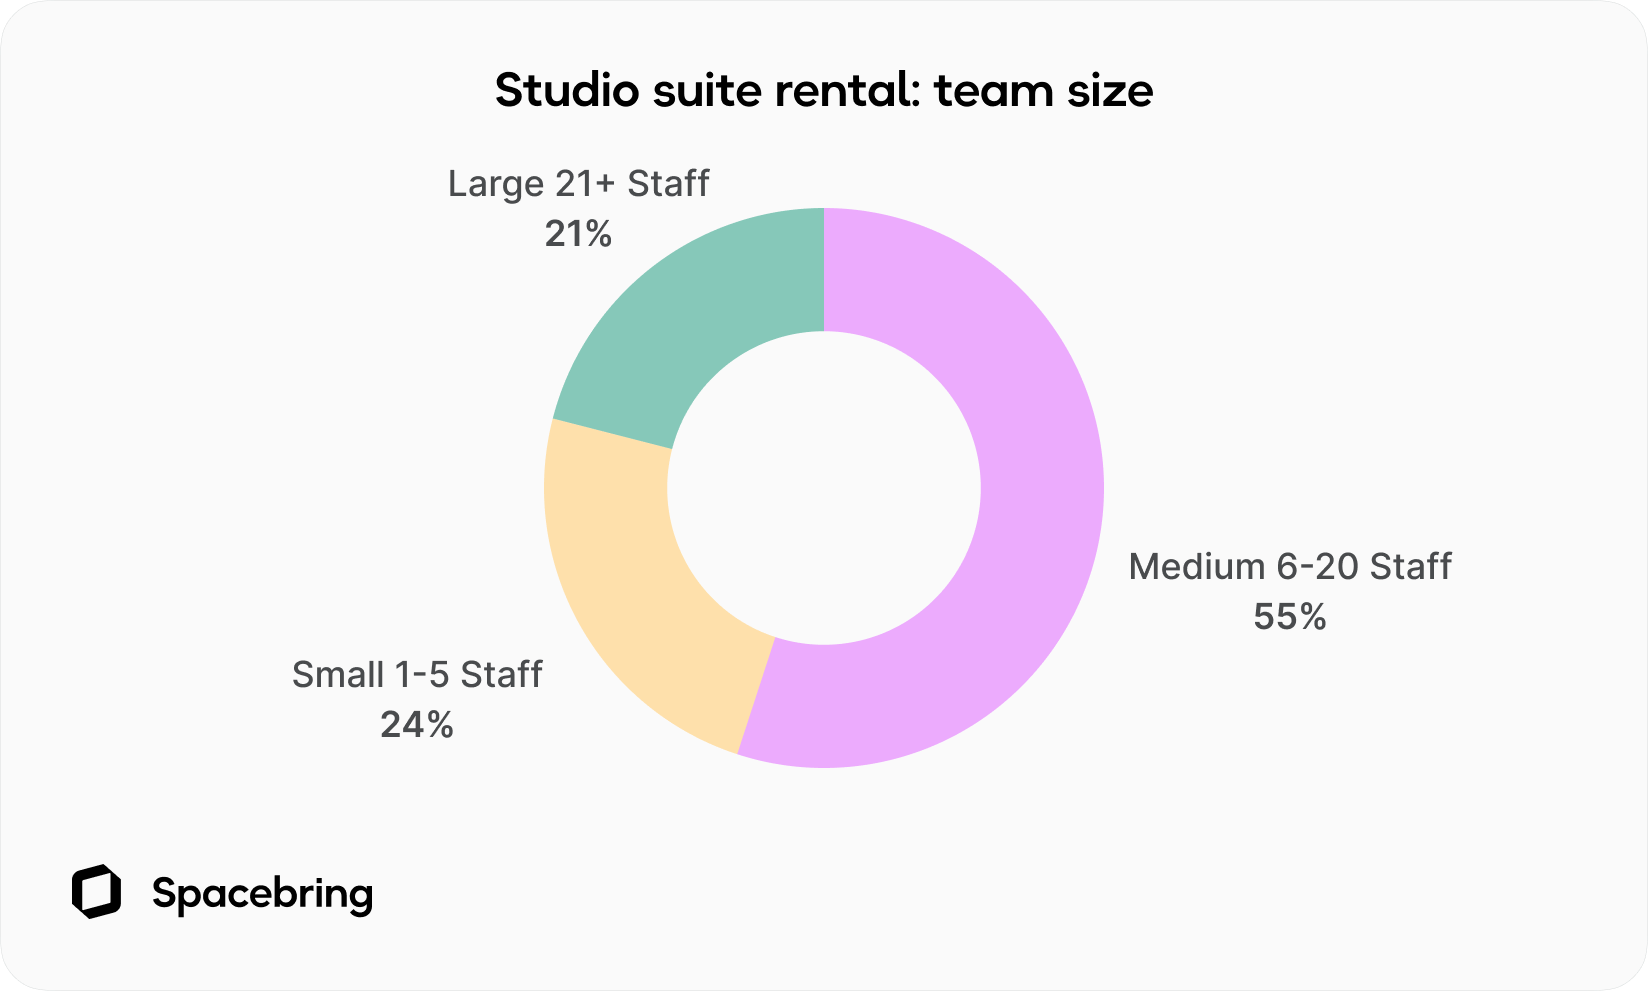 Team size of salon suite rentals